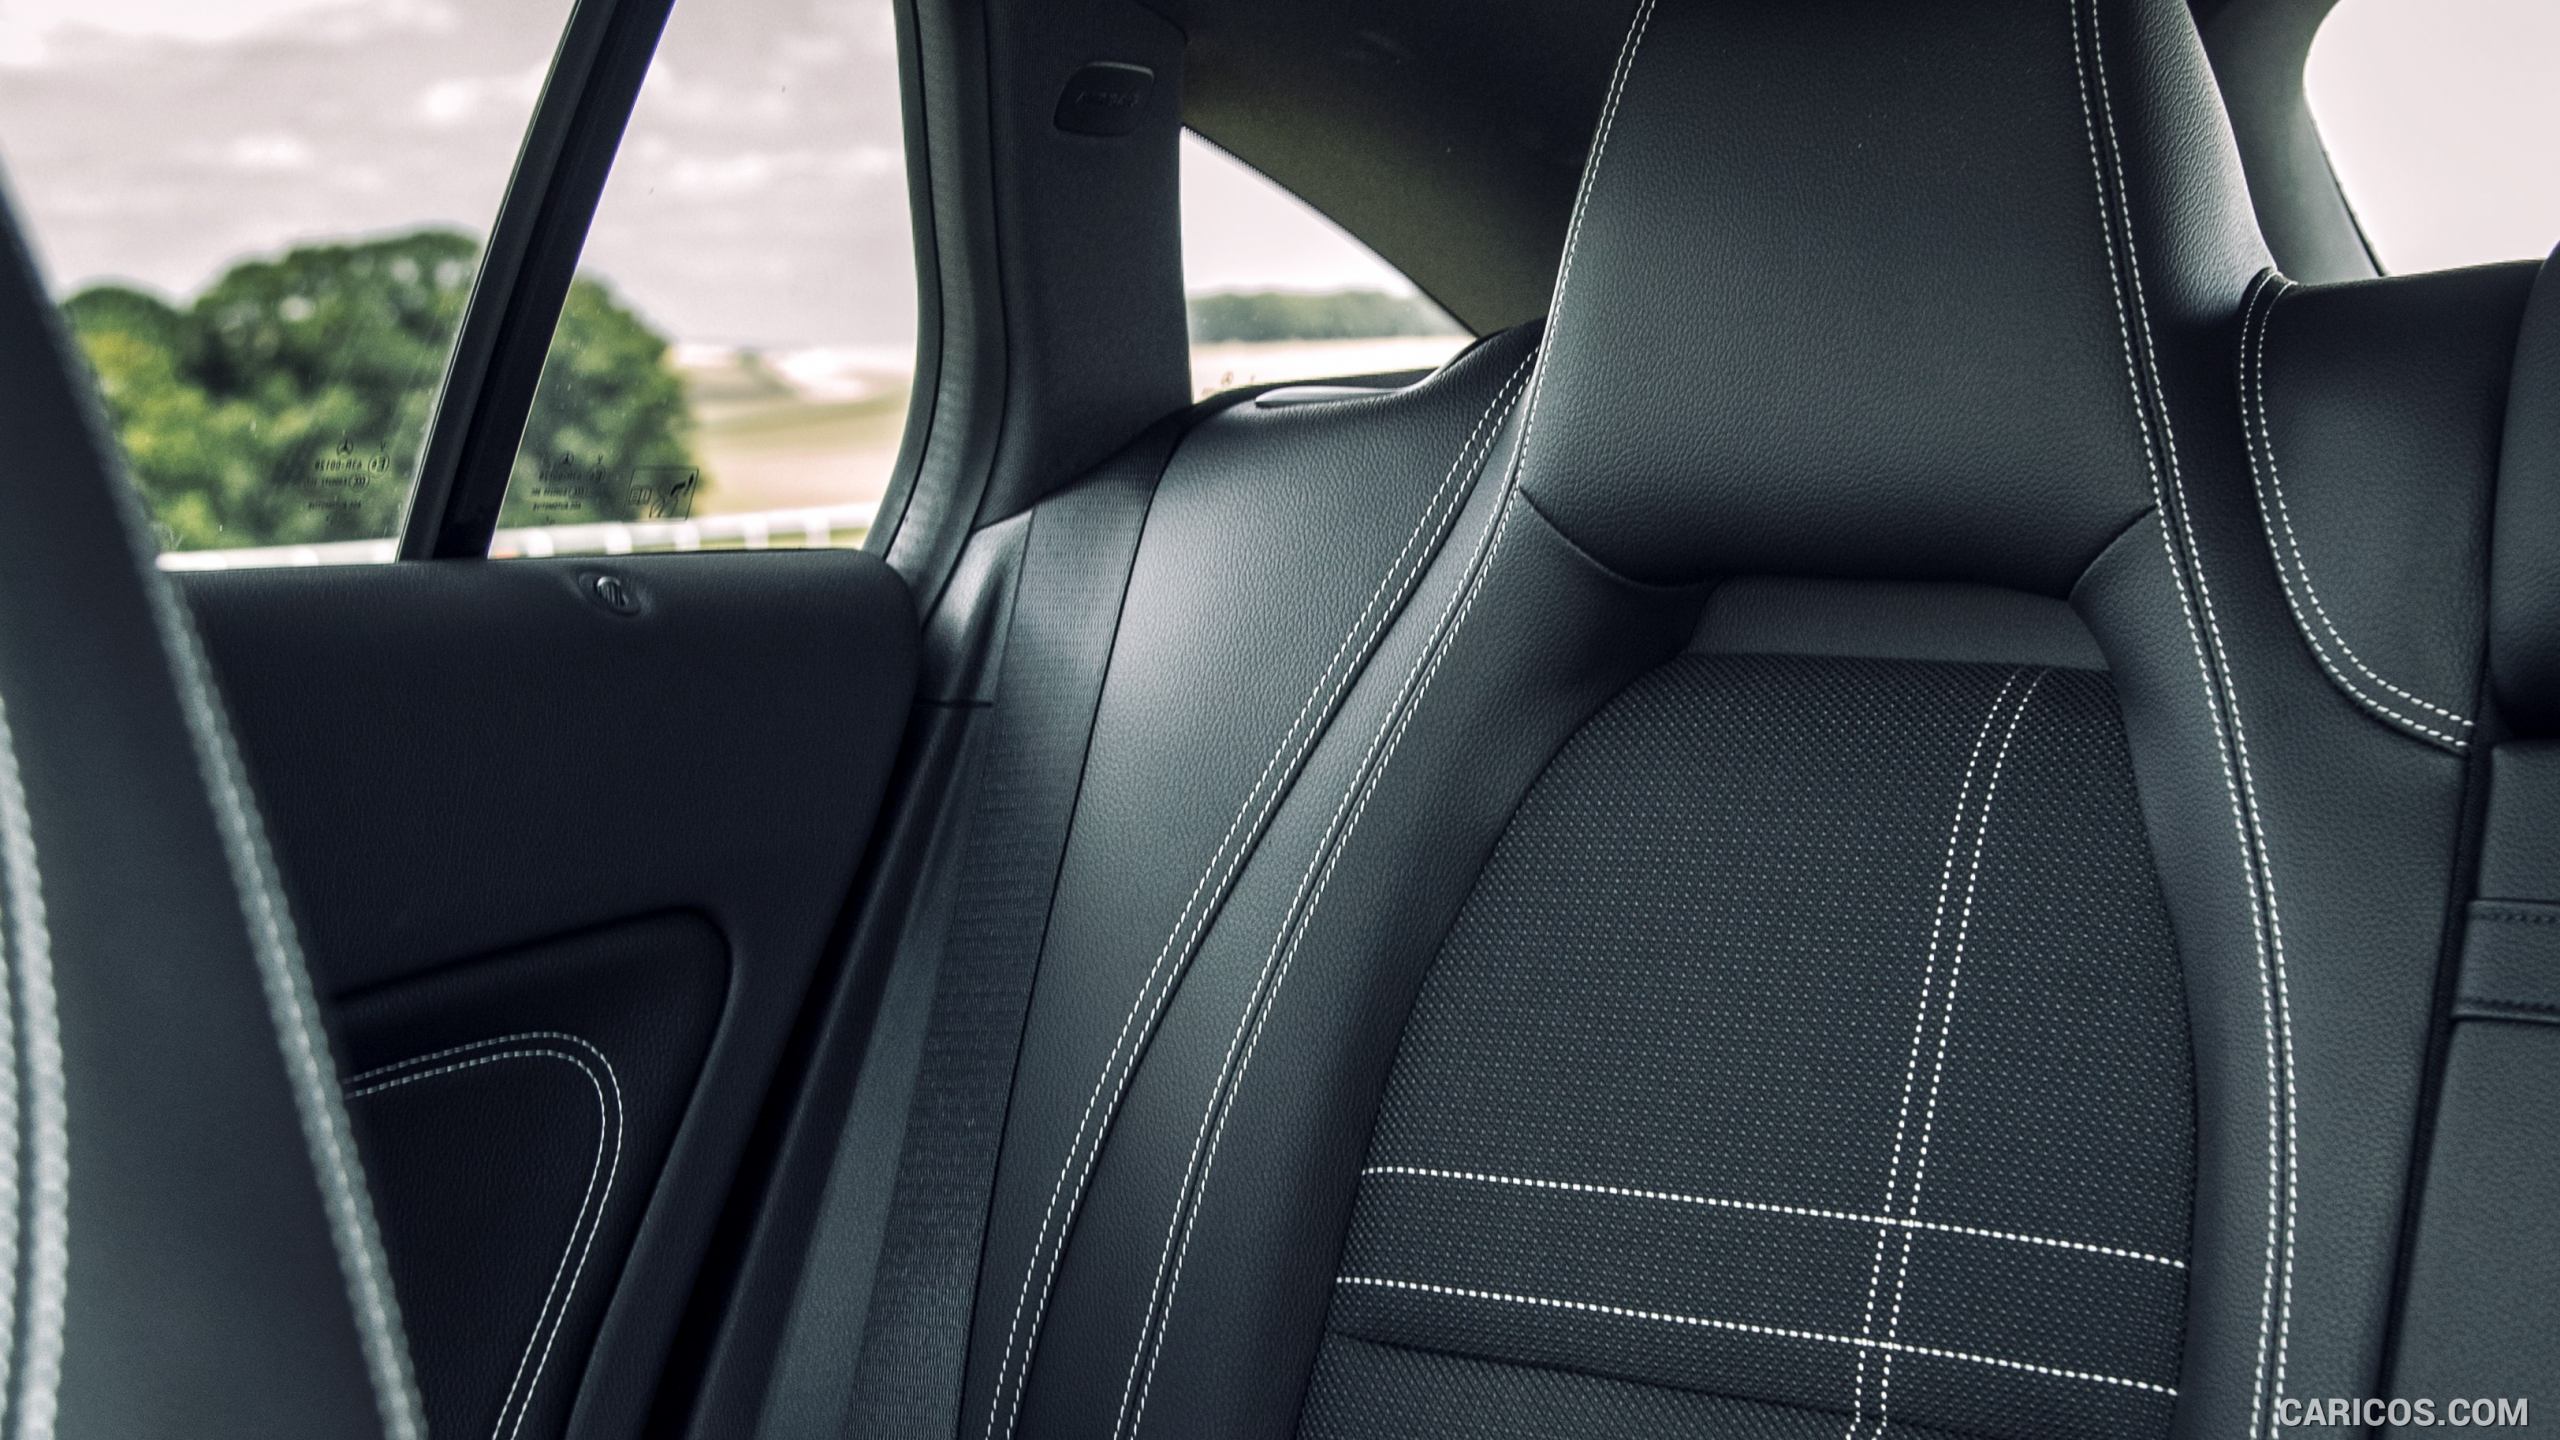 2015 Mercedes-Benz CLA 200 CDI Shooting Brake (UK-Spec) - Interior, Rear Seats, #95 of 96